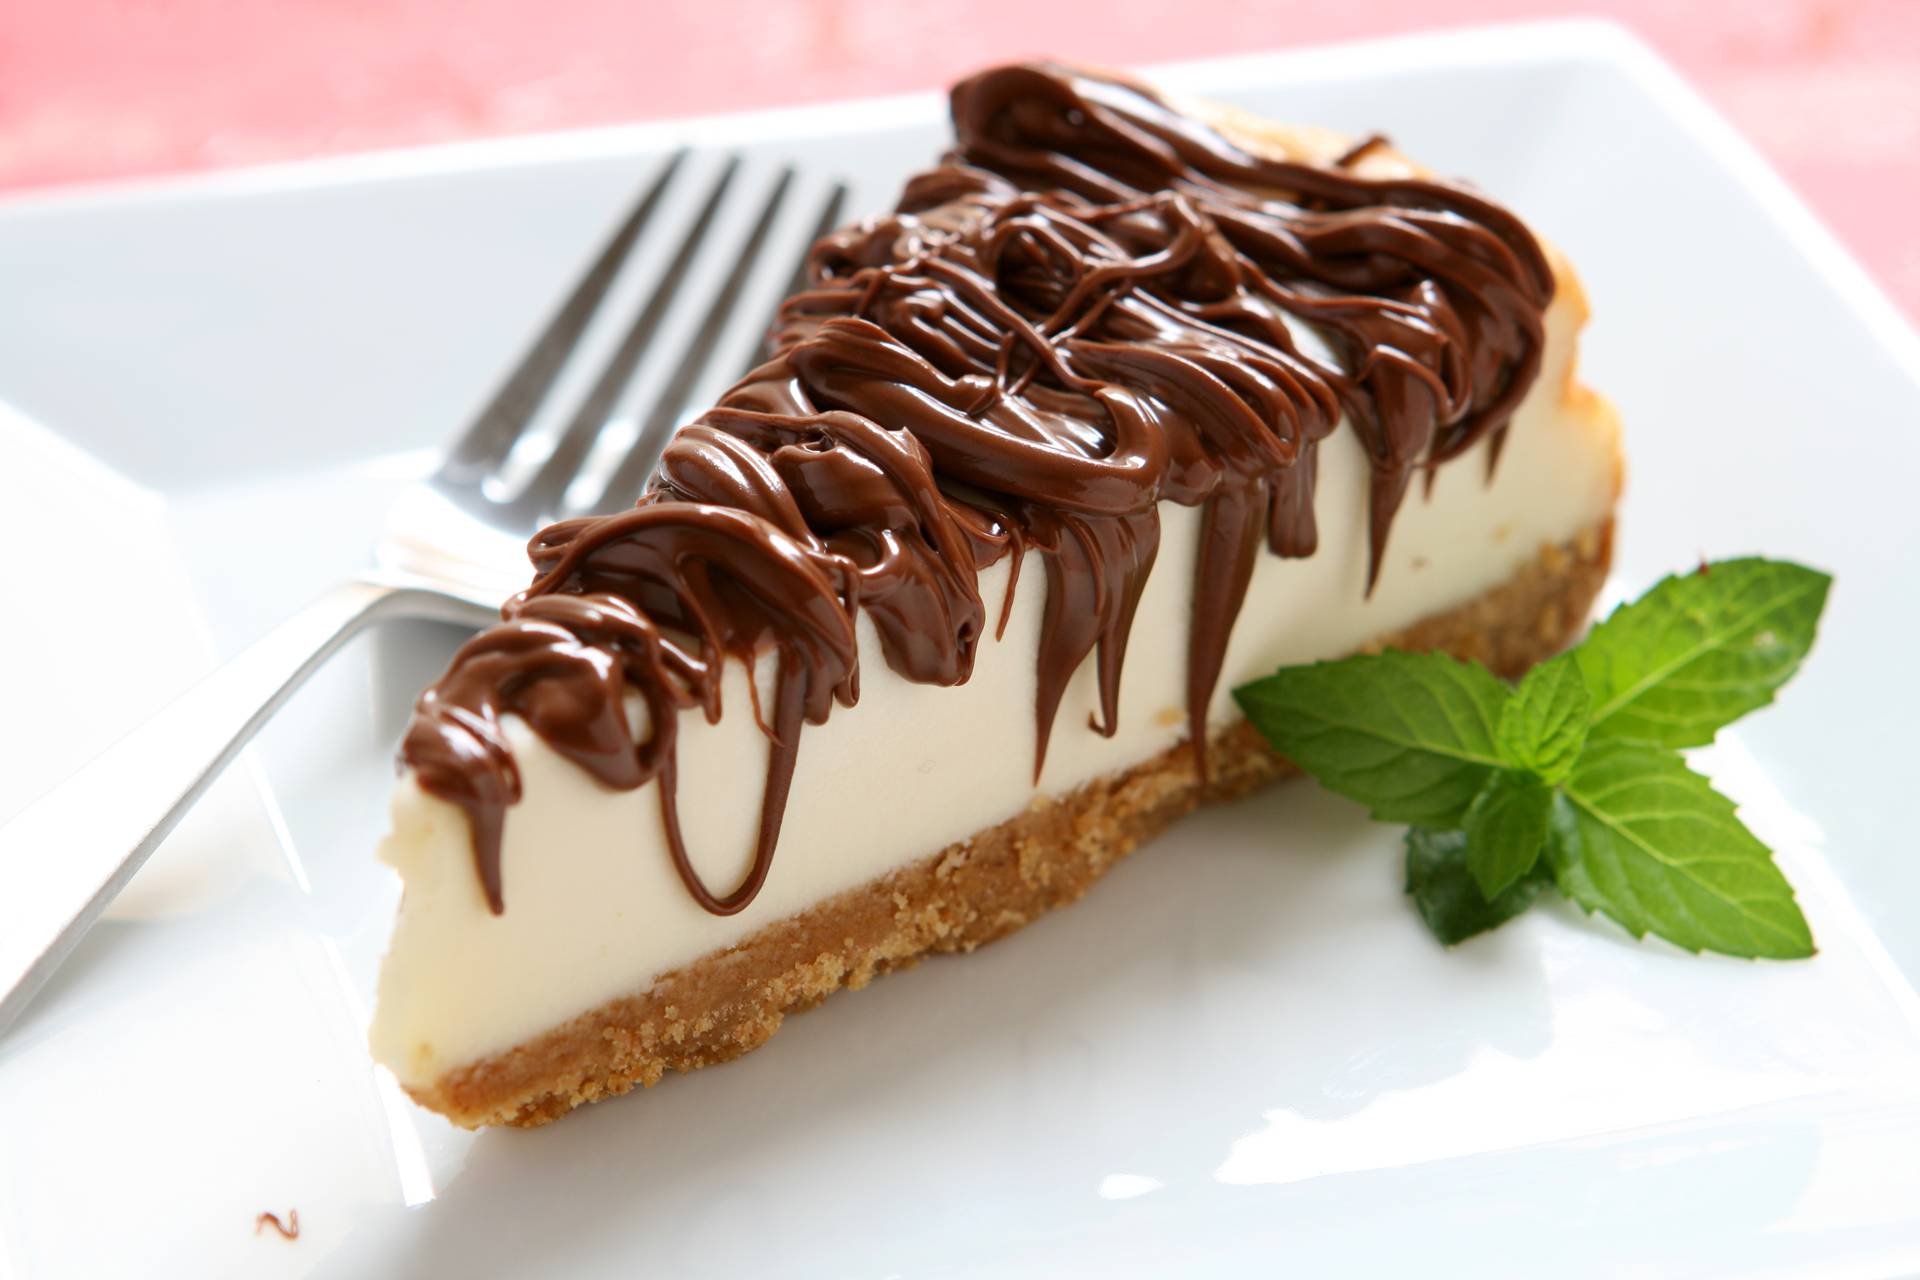 Slice of Chocolate Cheesecake